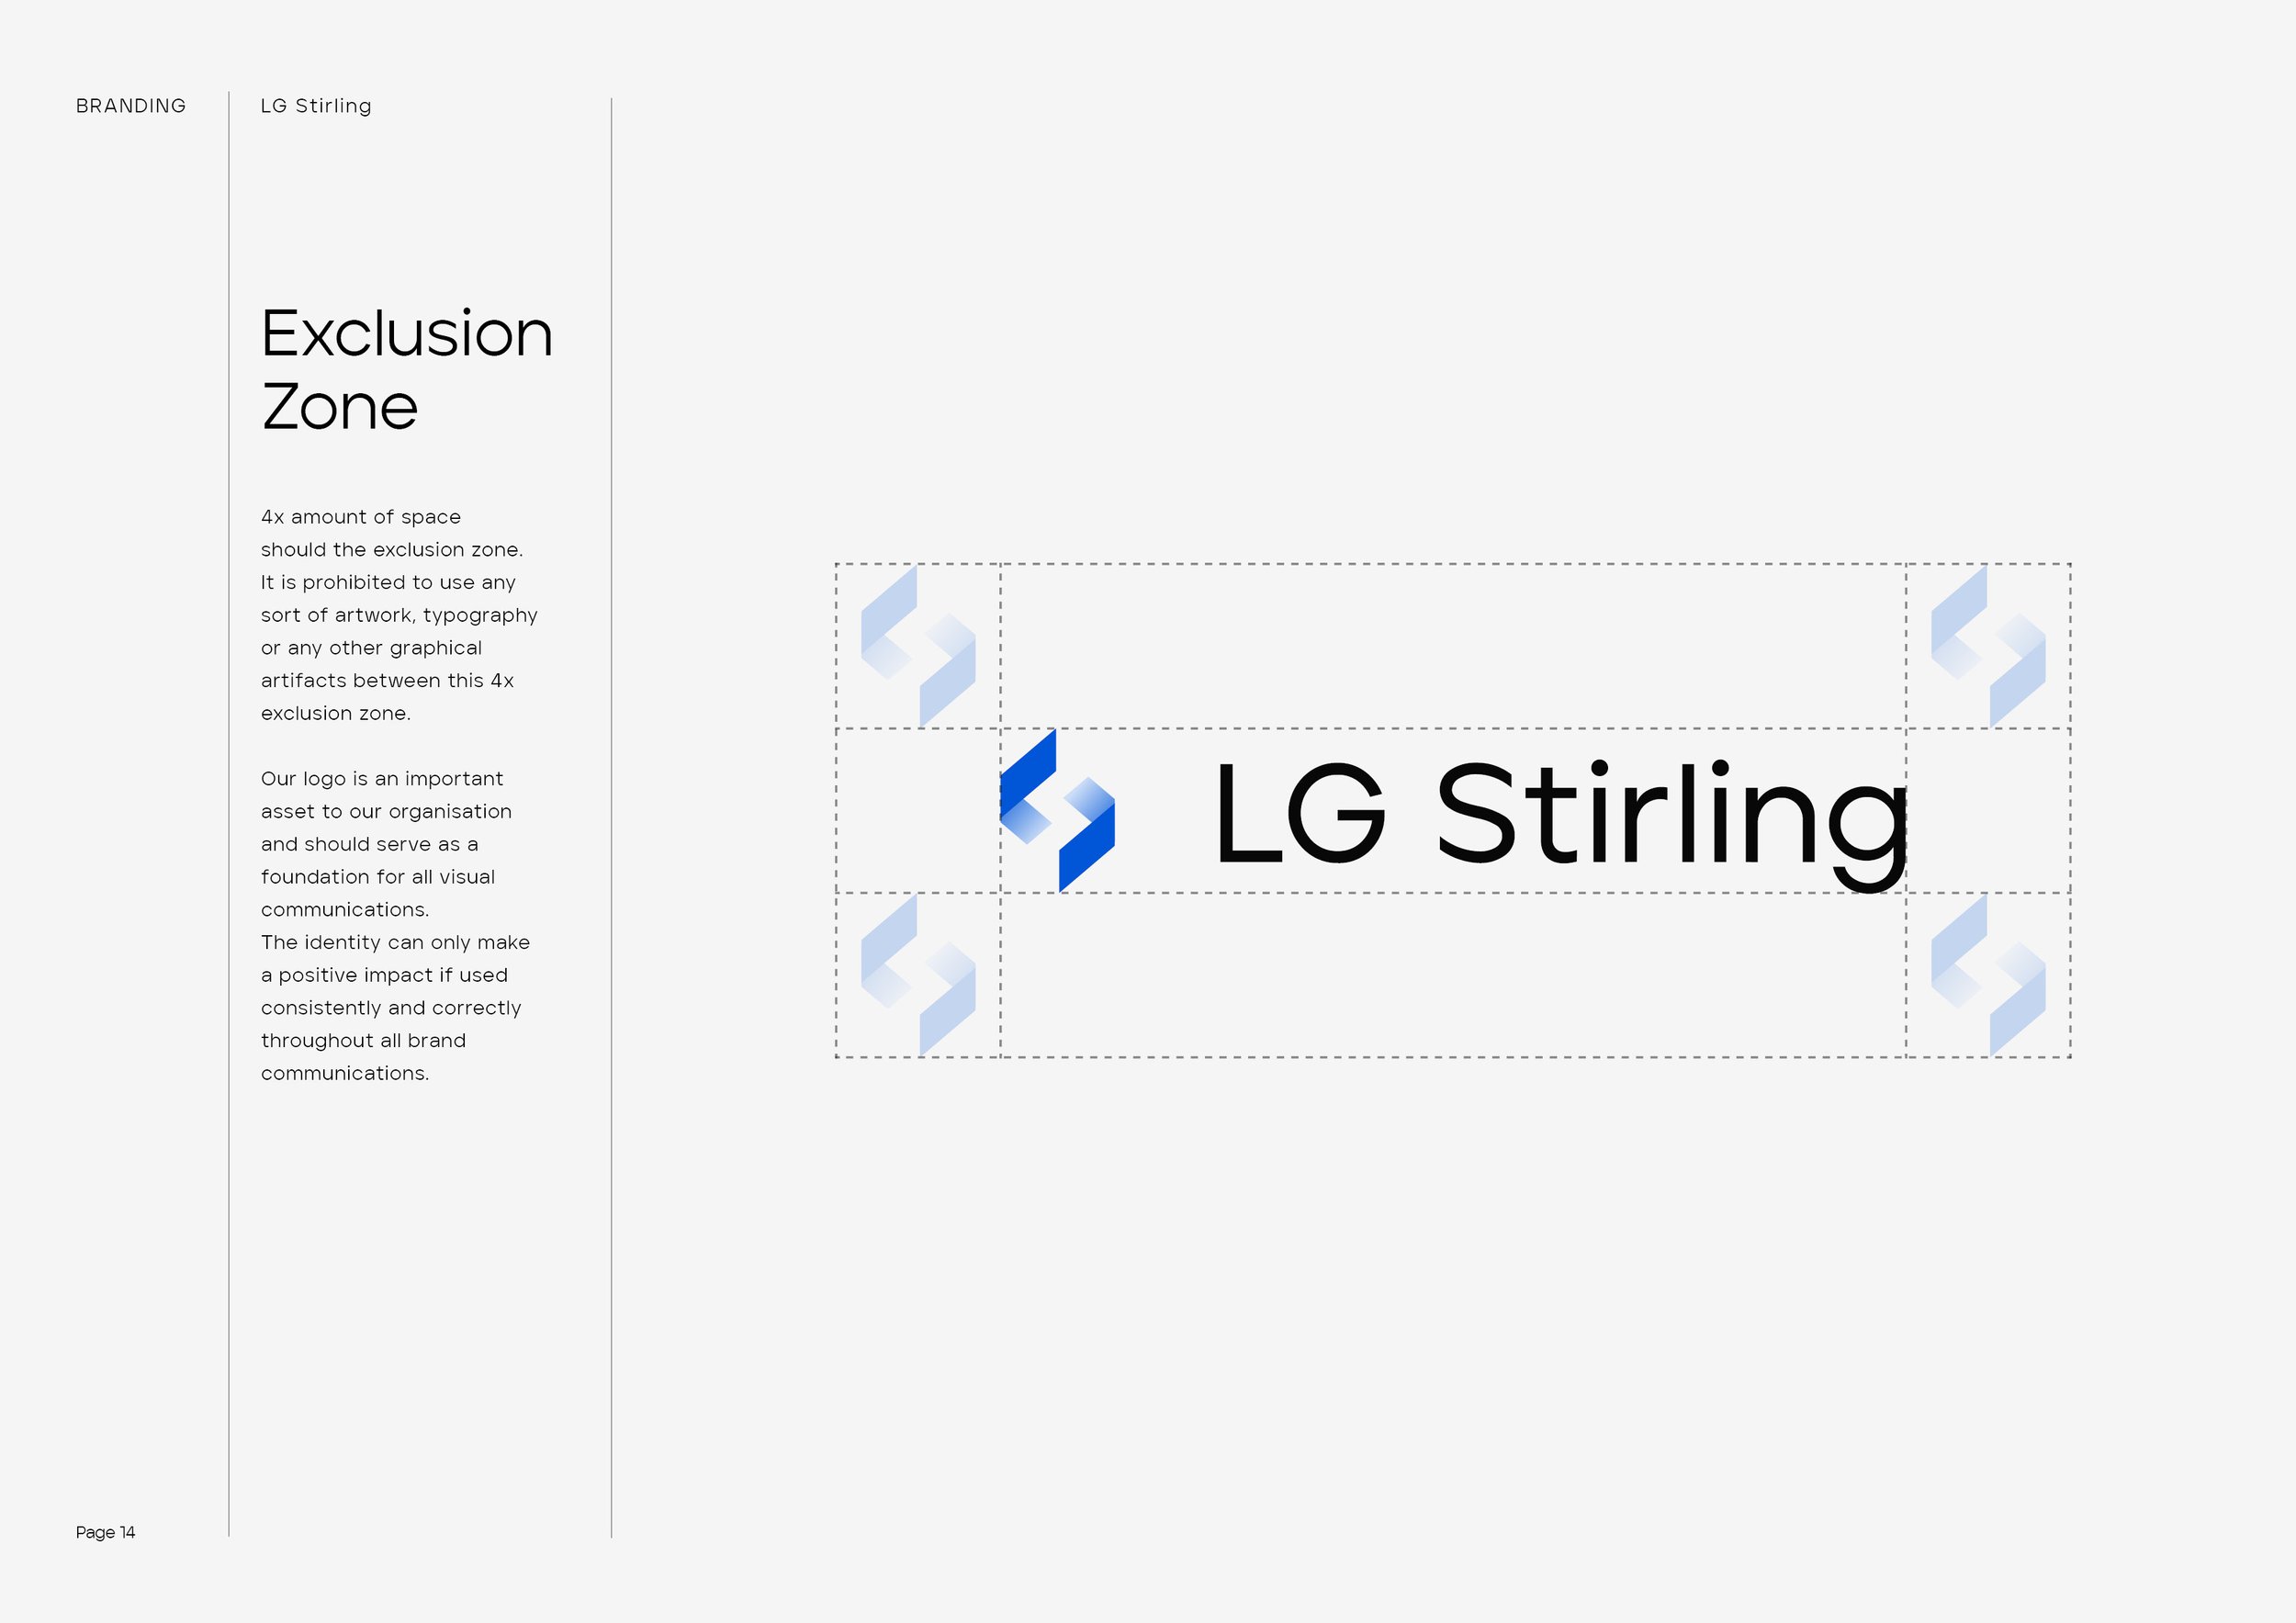 LG Stirling Logo And Brand Presentation14.jpg